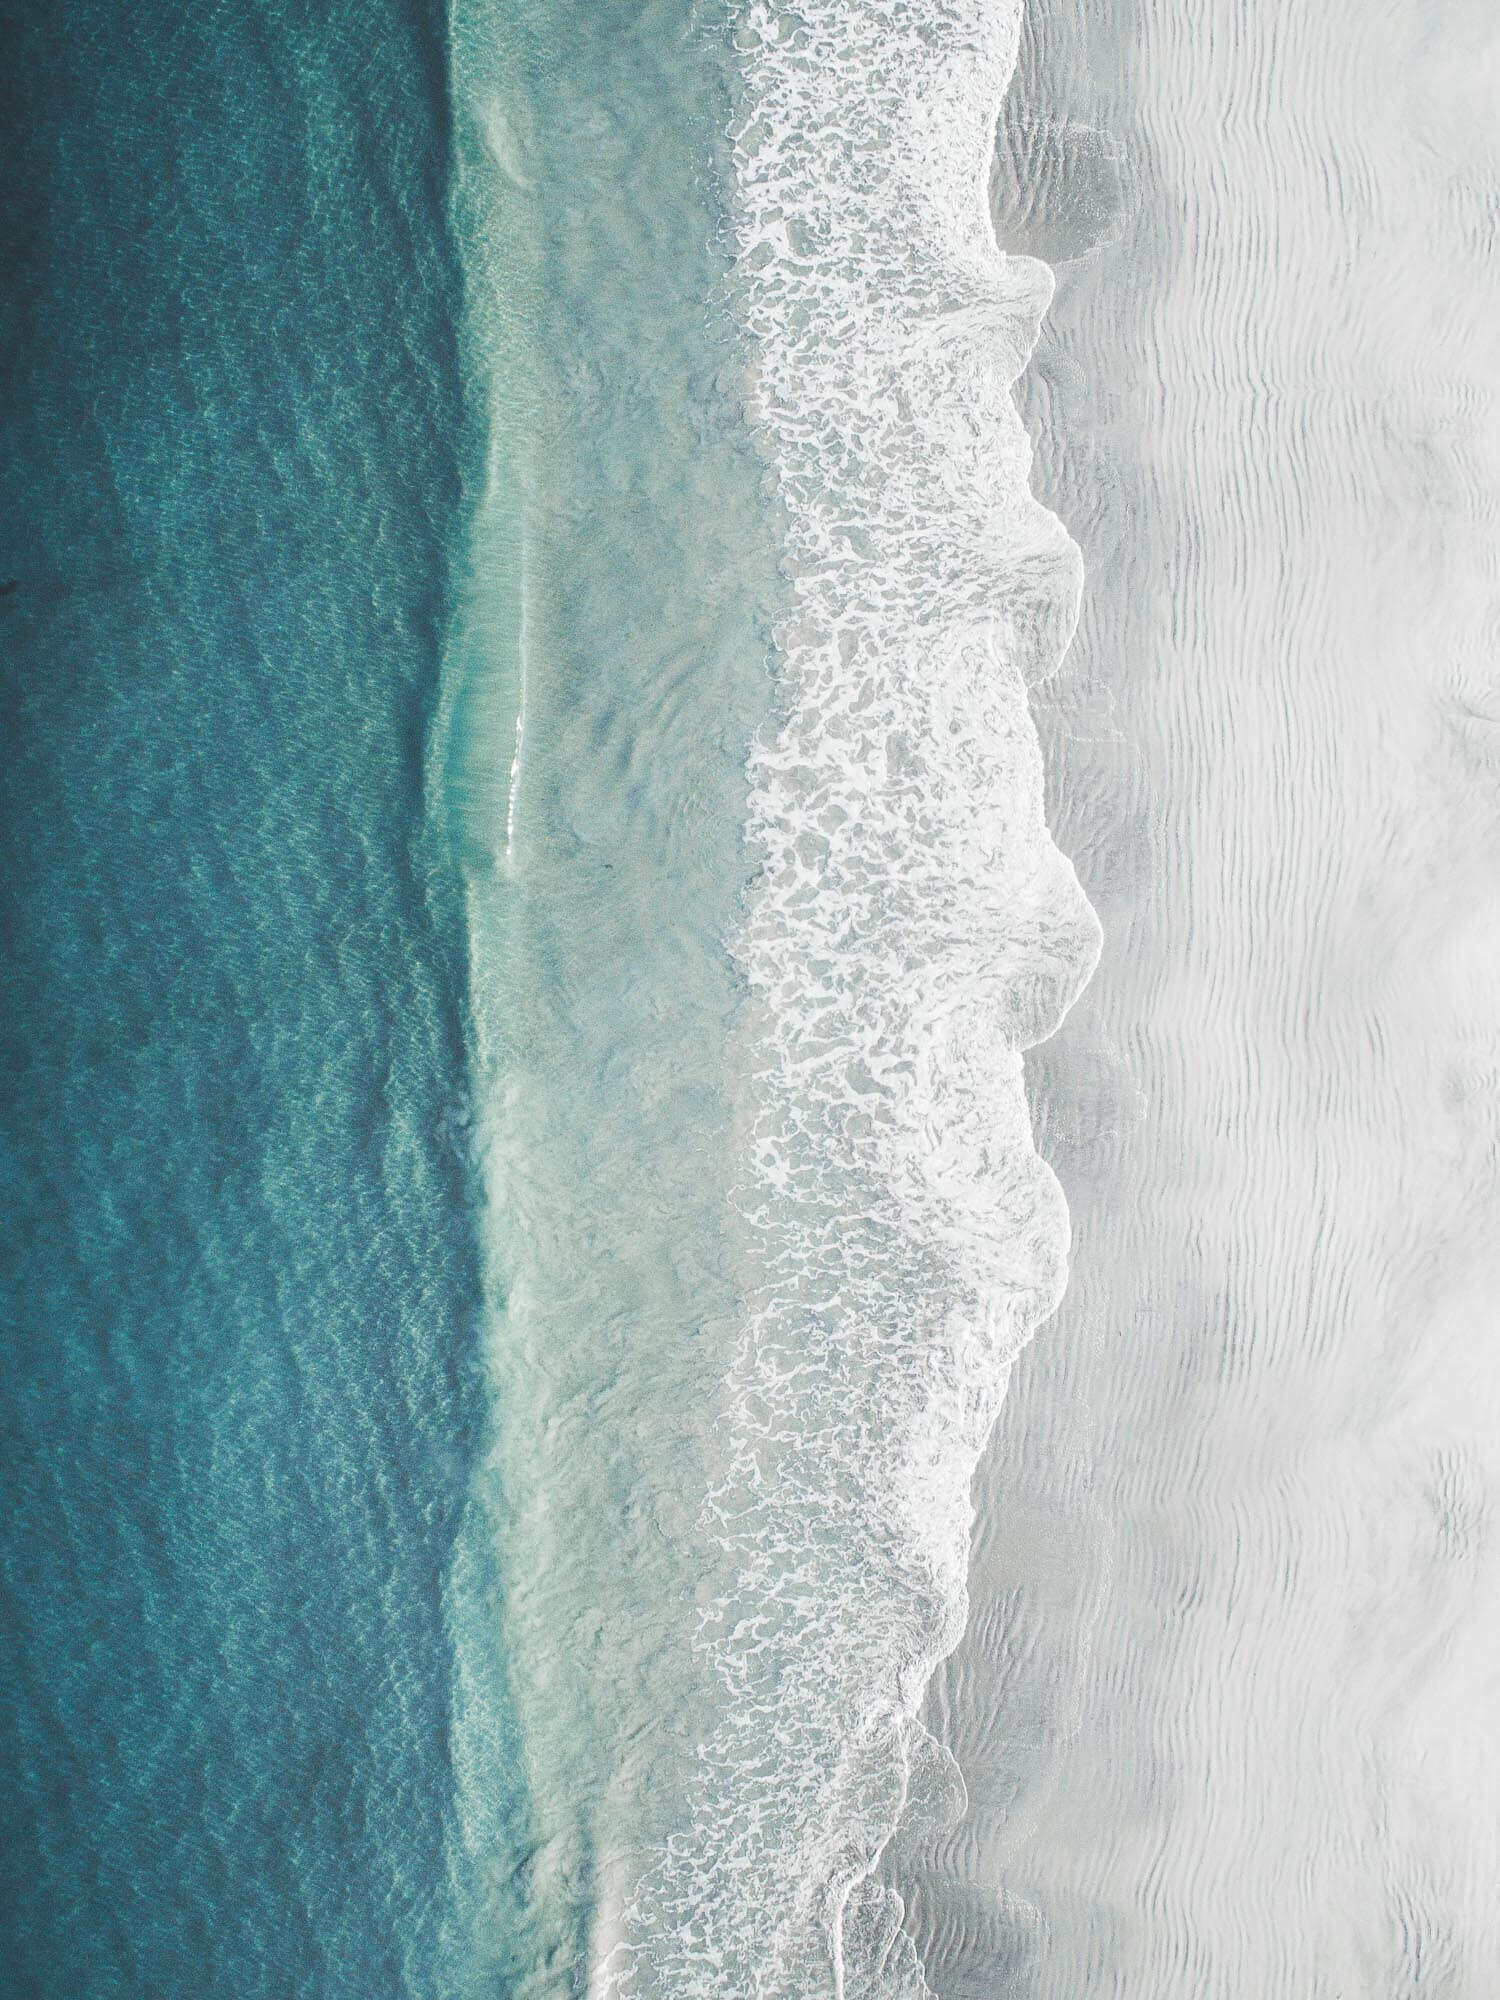 Lofoten Ocean Drone Photography.jpg